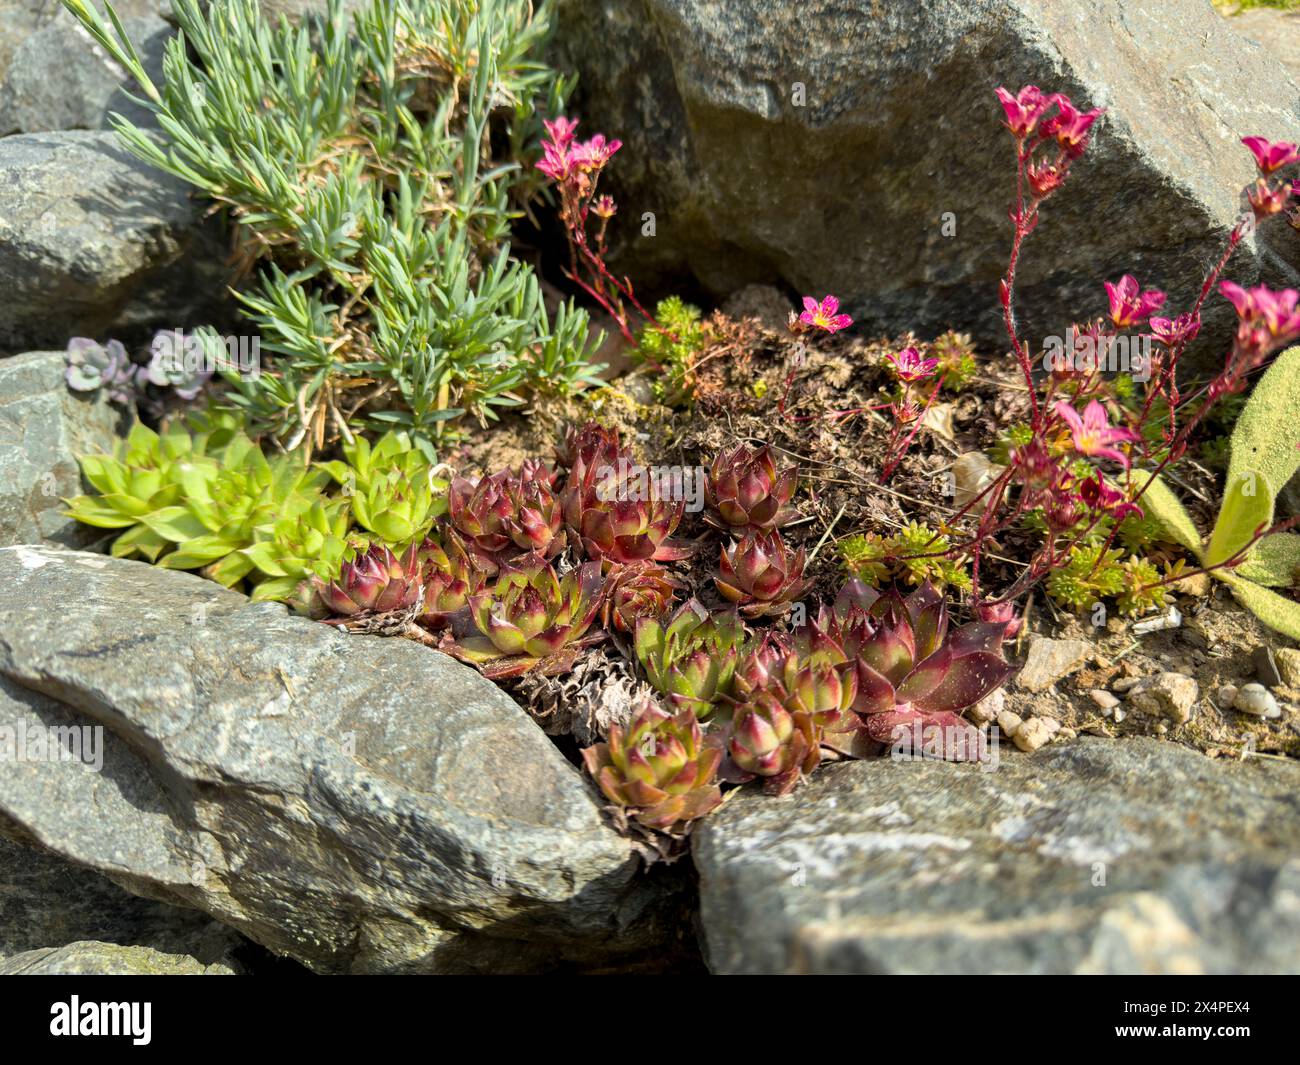 Rock garden with succulent plants in the garden Stock Photo